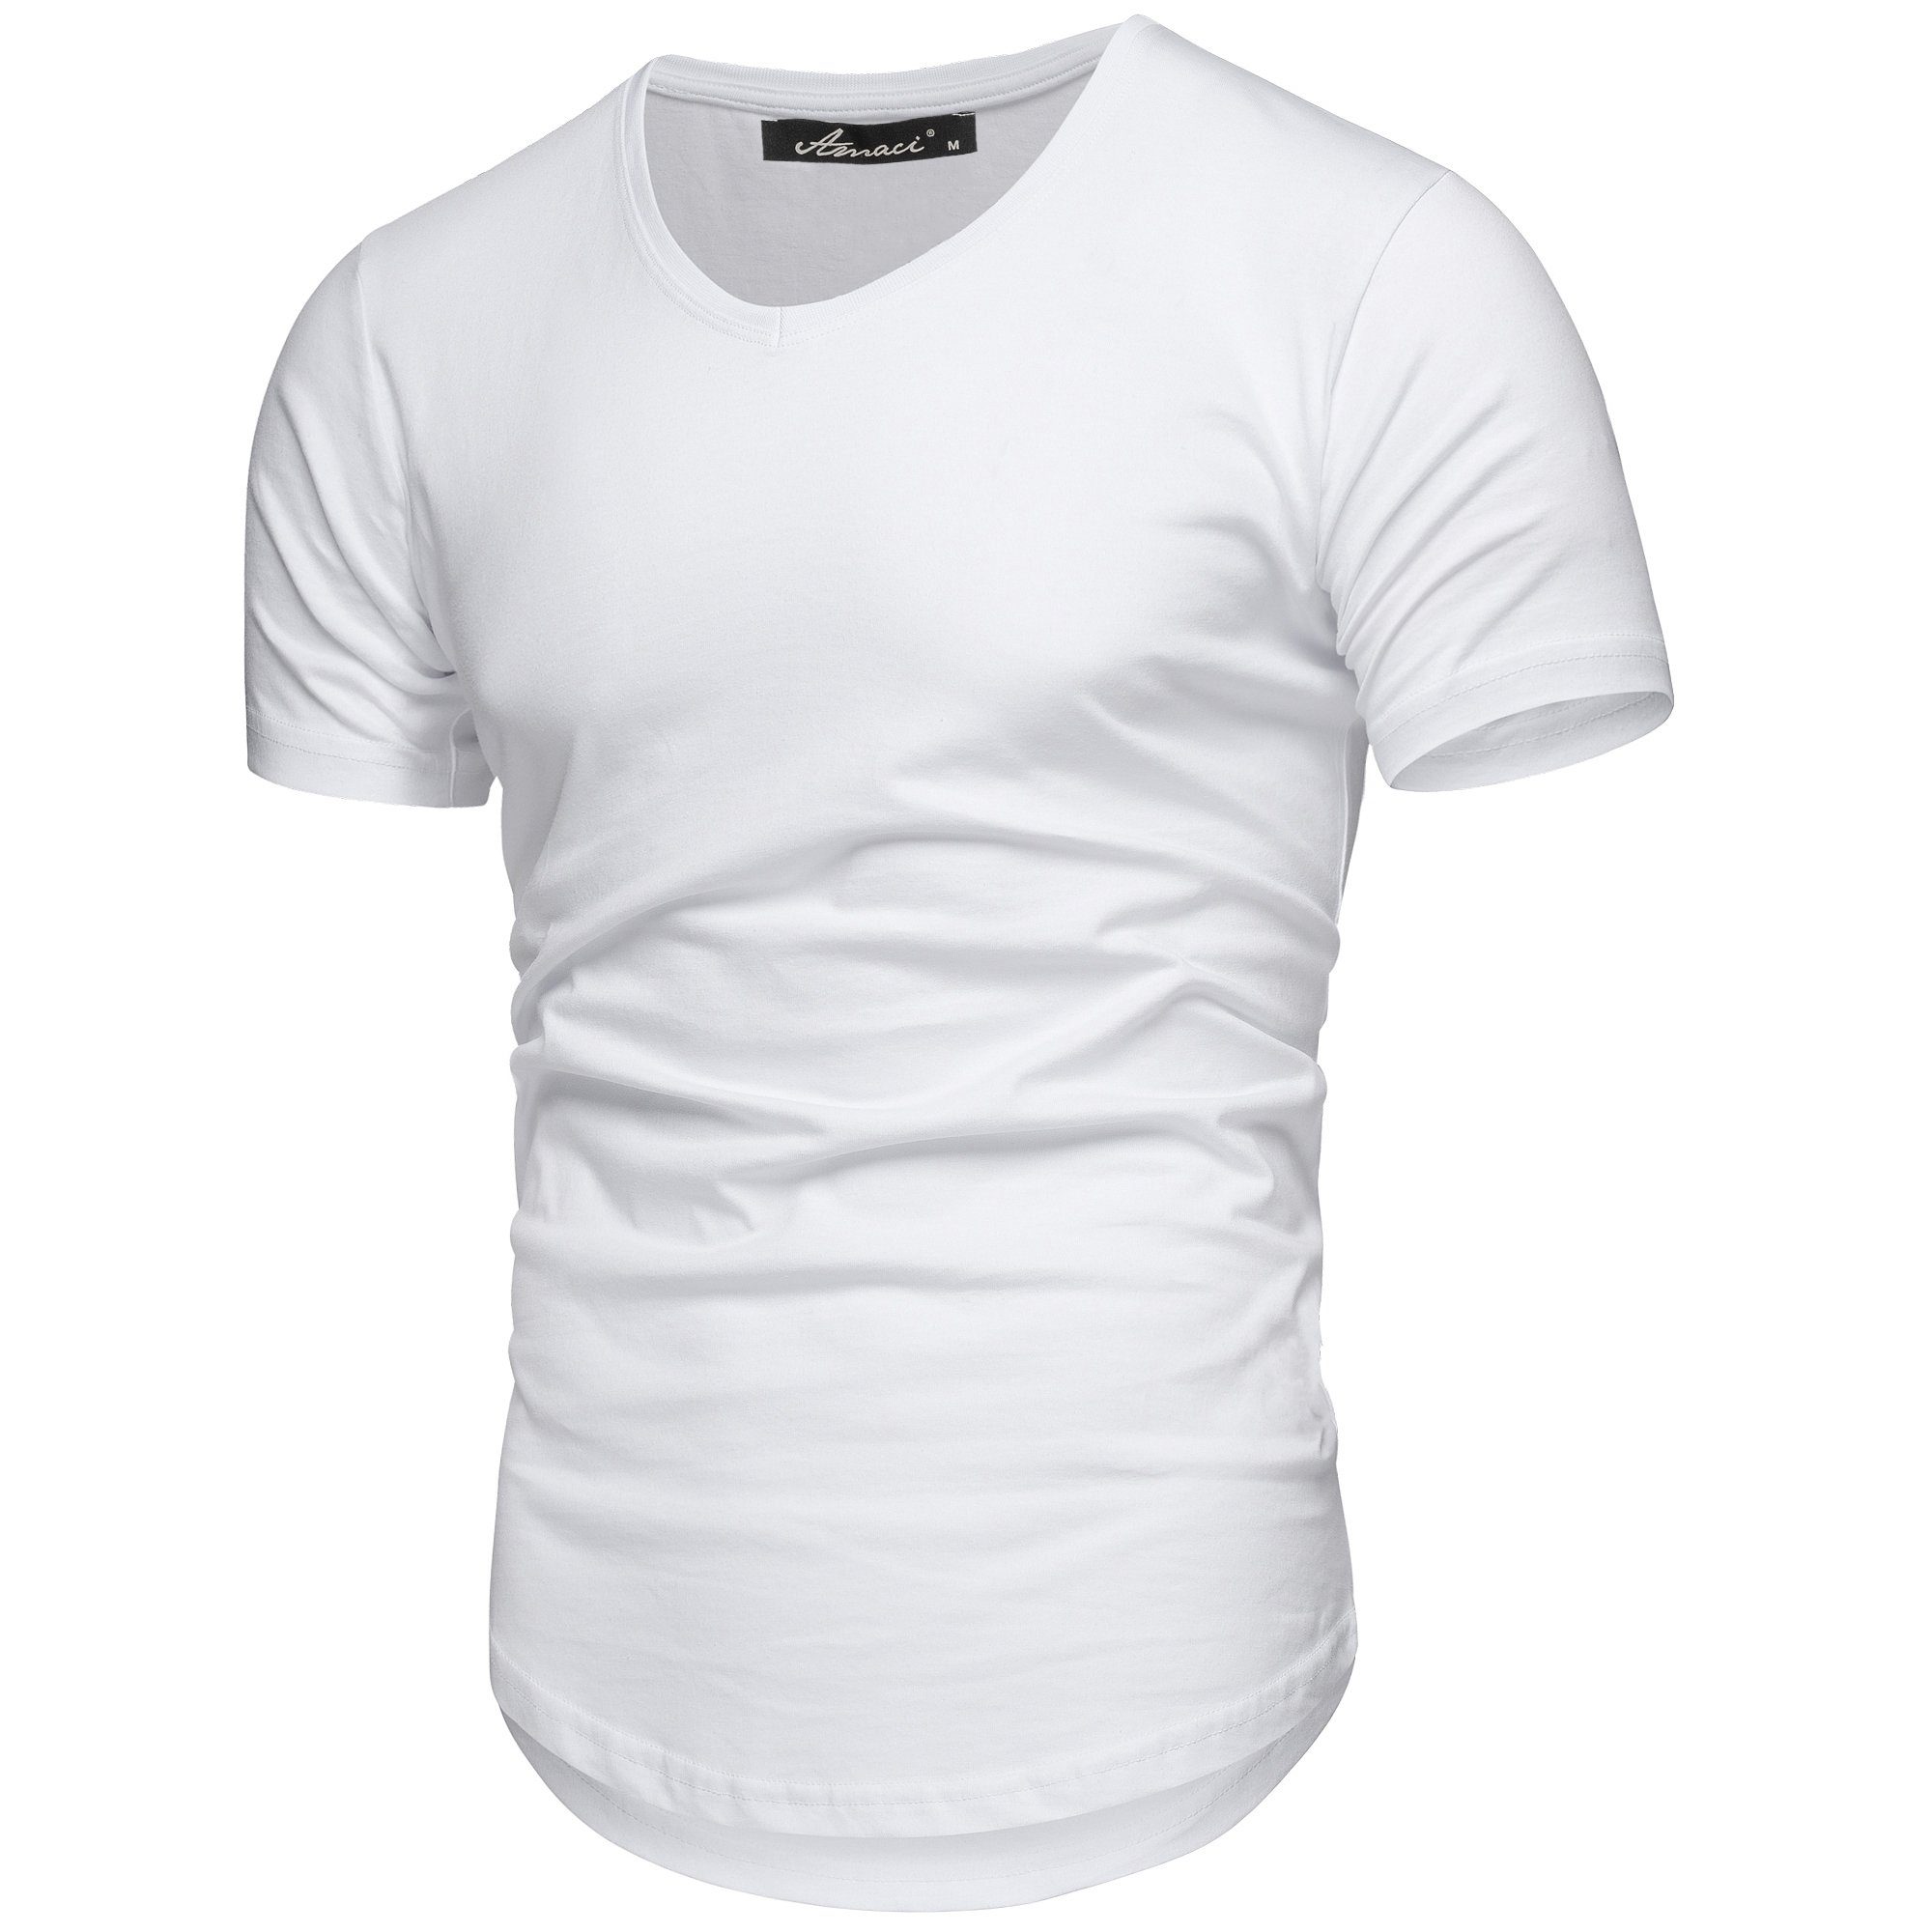 V-Ausschnitt BELLEVUE Amaci&Sons Shirt Basic V-Ausschnitt Oversize T-Shirt Weiß Herren Basic V-Neck Vintage T-Shirt mit Oversize